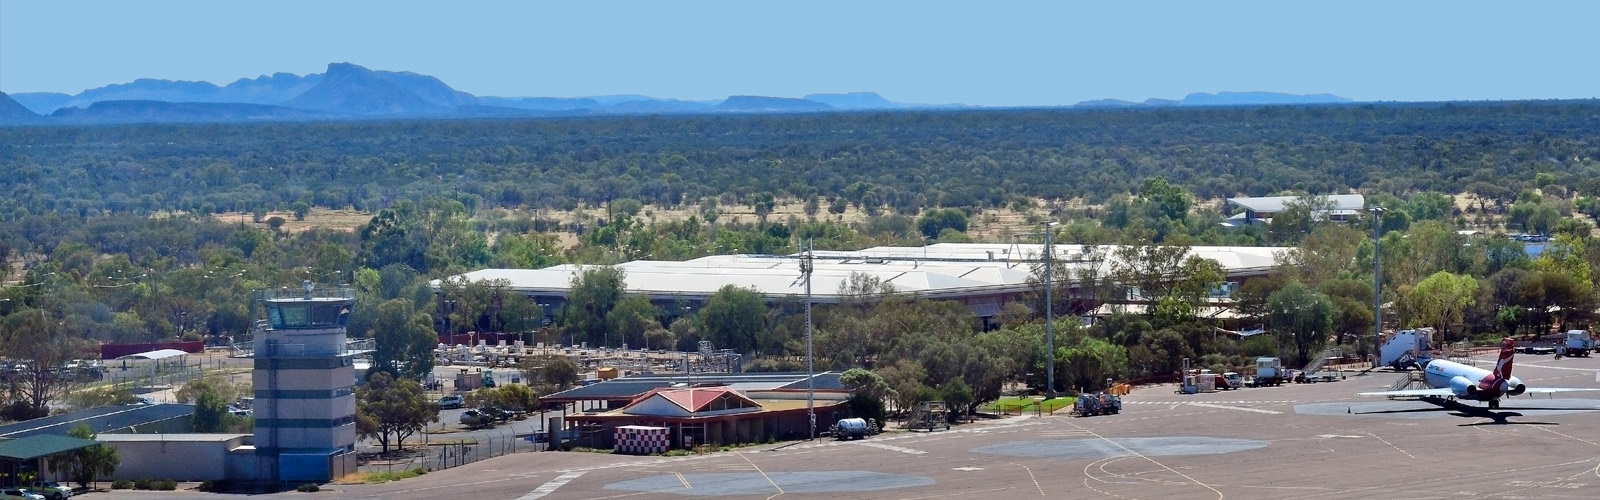 Alice Springs Airport